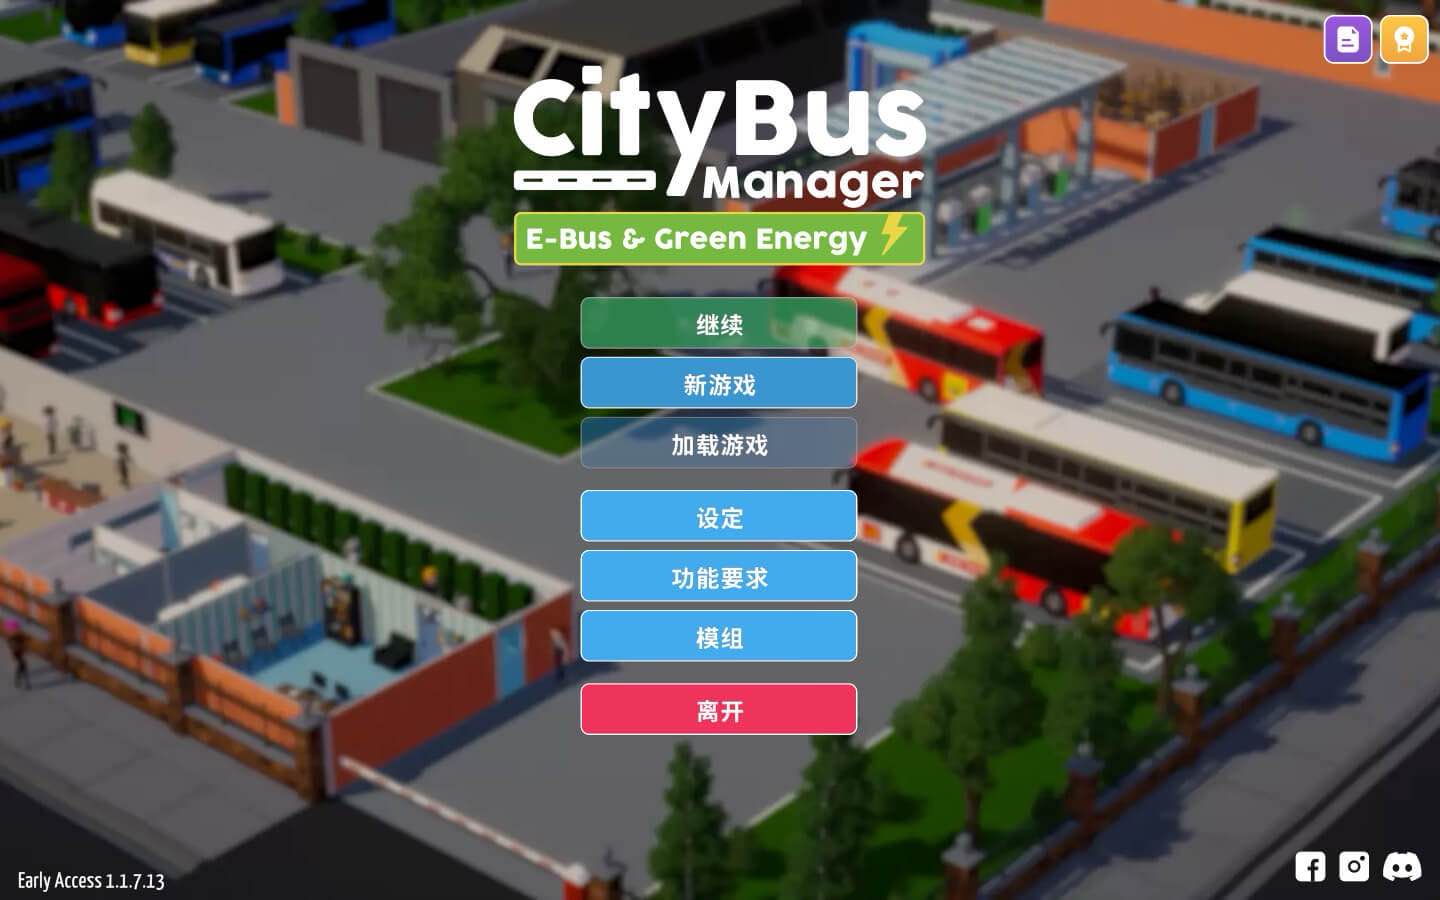 城市公交经理 for Mac City Bus Manager v1.1.7.13 中文原生版 苹果电脑